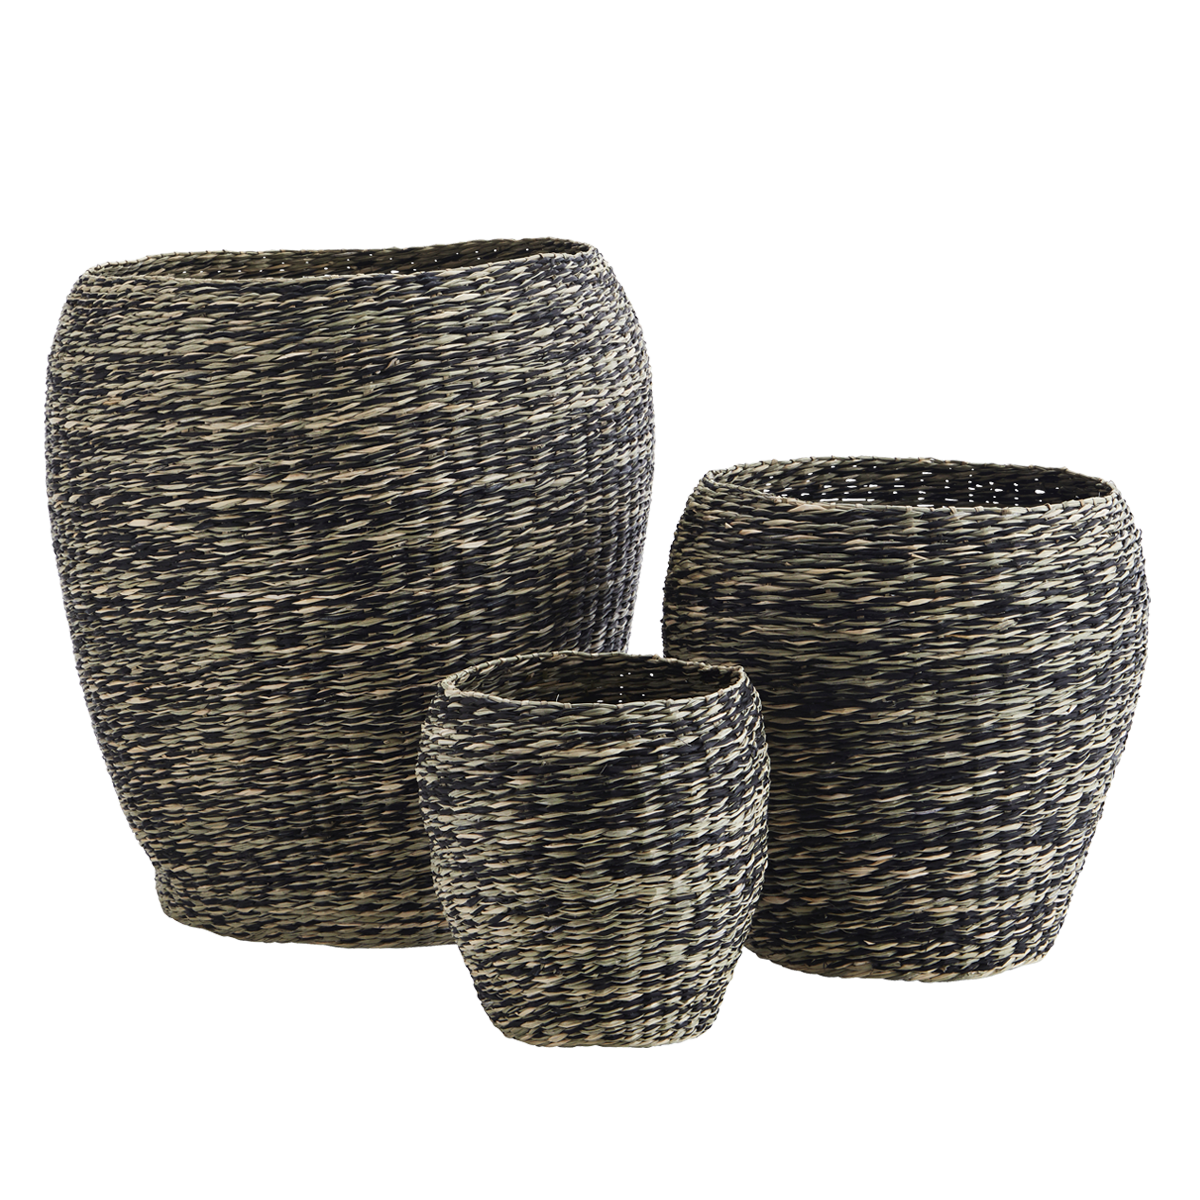 Organic shaped seagrass baskets